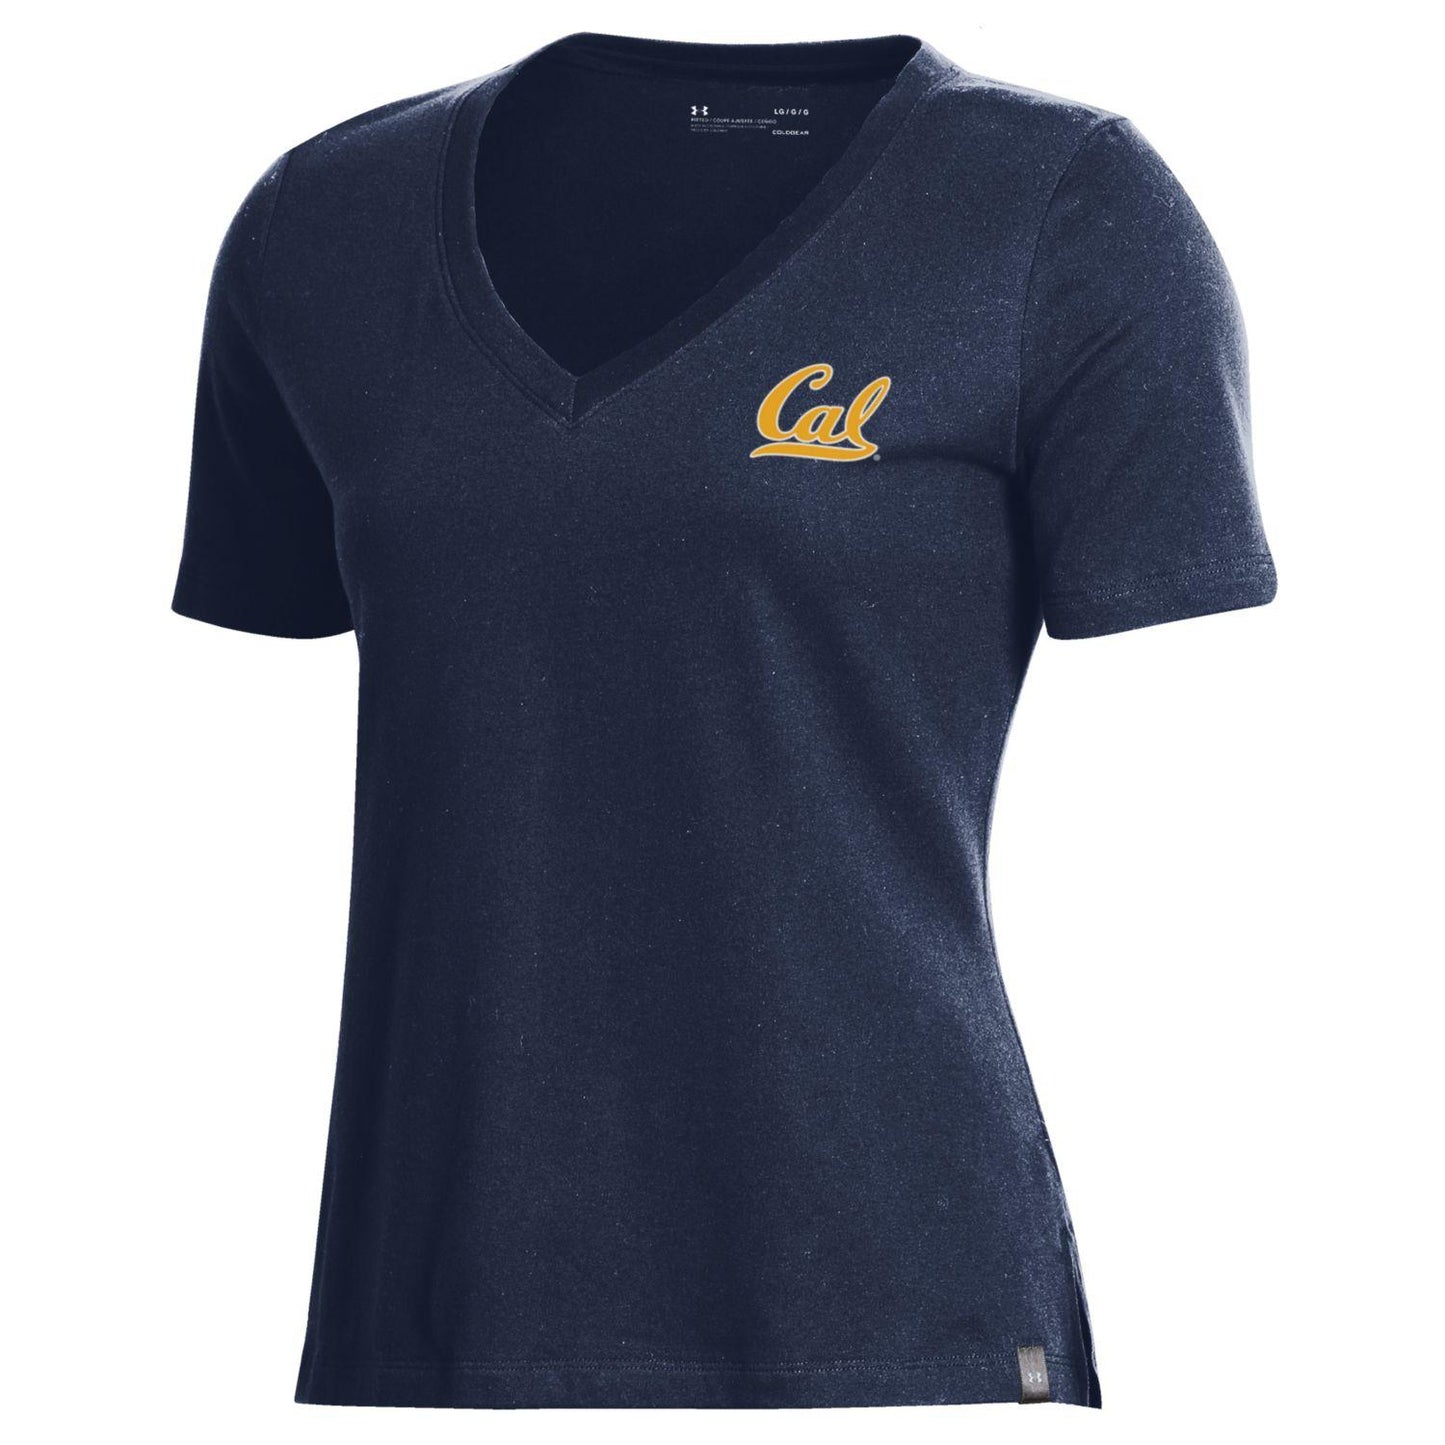 U.C. Berkeley Cal Under Armour Women's performance cotton T-Shirt-Navy-Shop College Wear